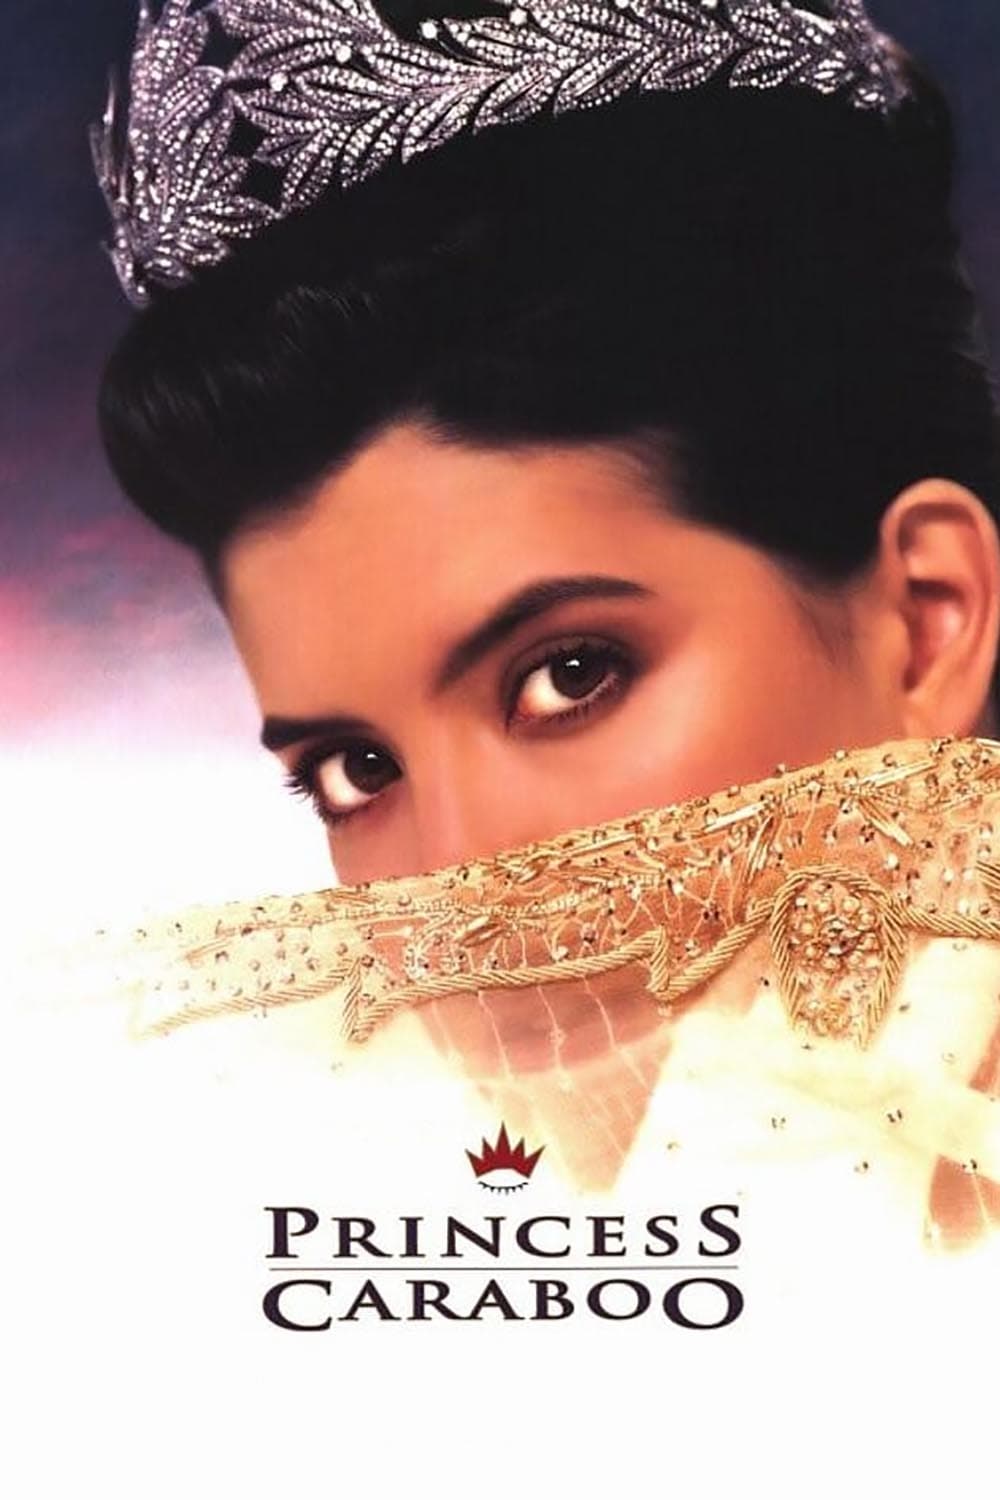 Prinzessin Caraboo (1994)